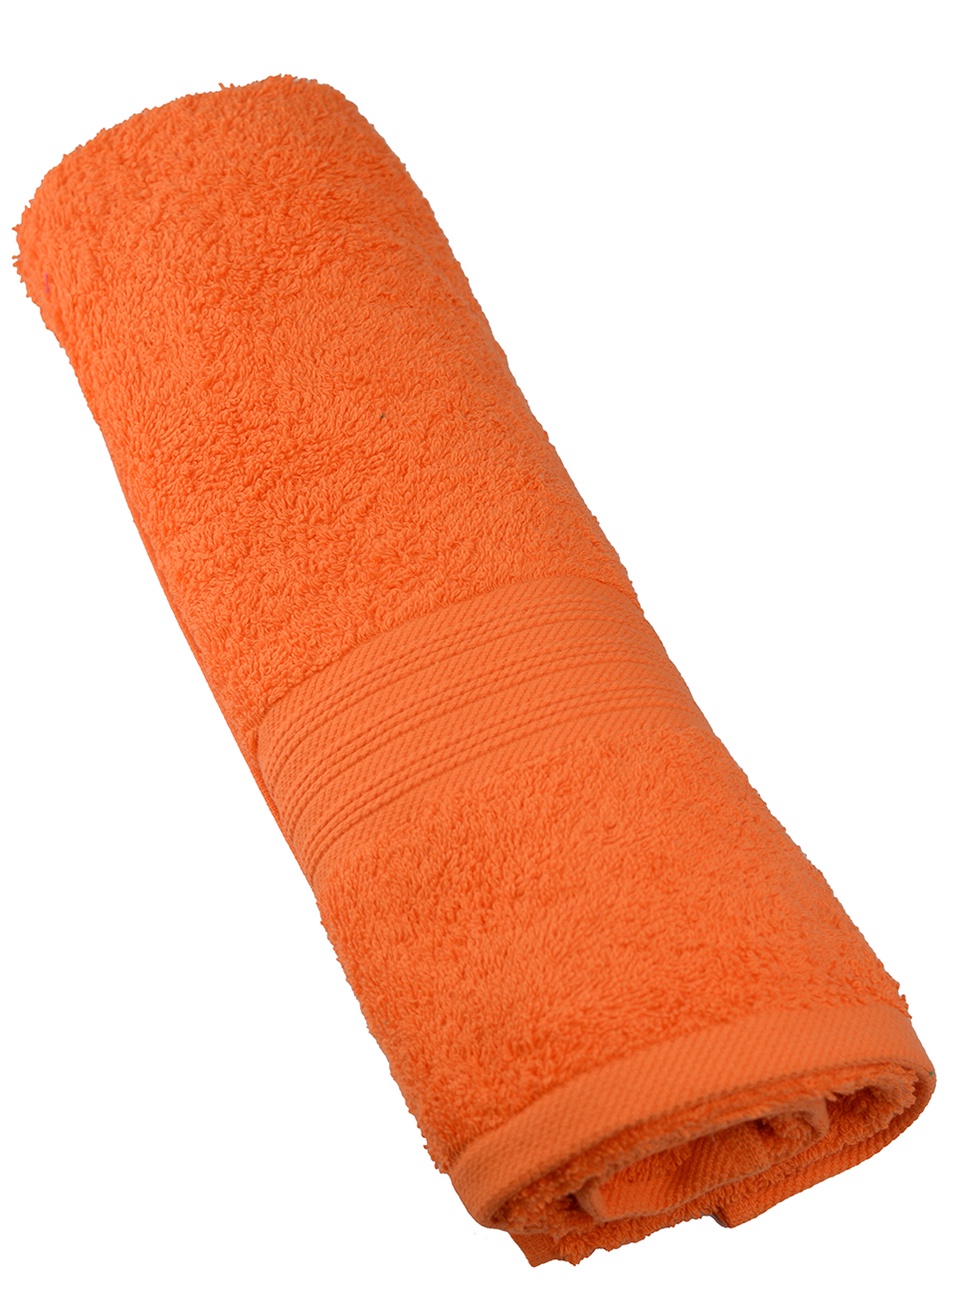 Полотенце махровое SEL, цвет: оранжевый, 100х150 см